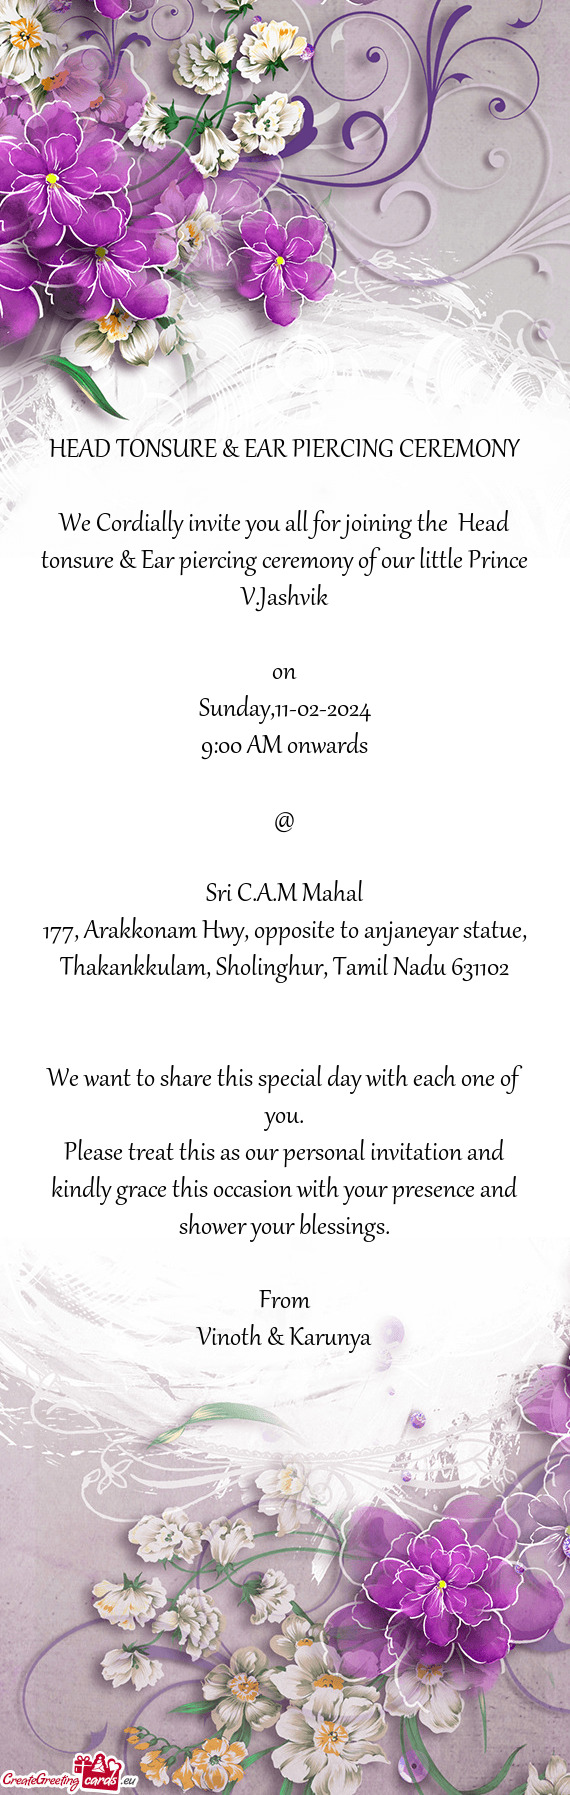 177, Arakkonam Hwy, opposite to anjaneyar statue, Thakankkulam, Sholinghur, Tamil Nadu 631102